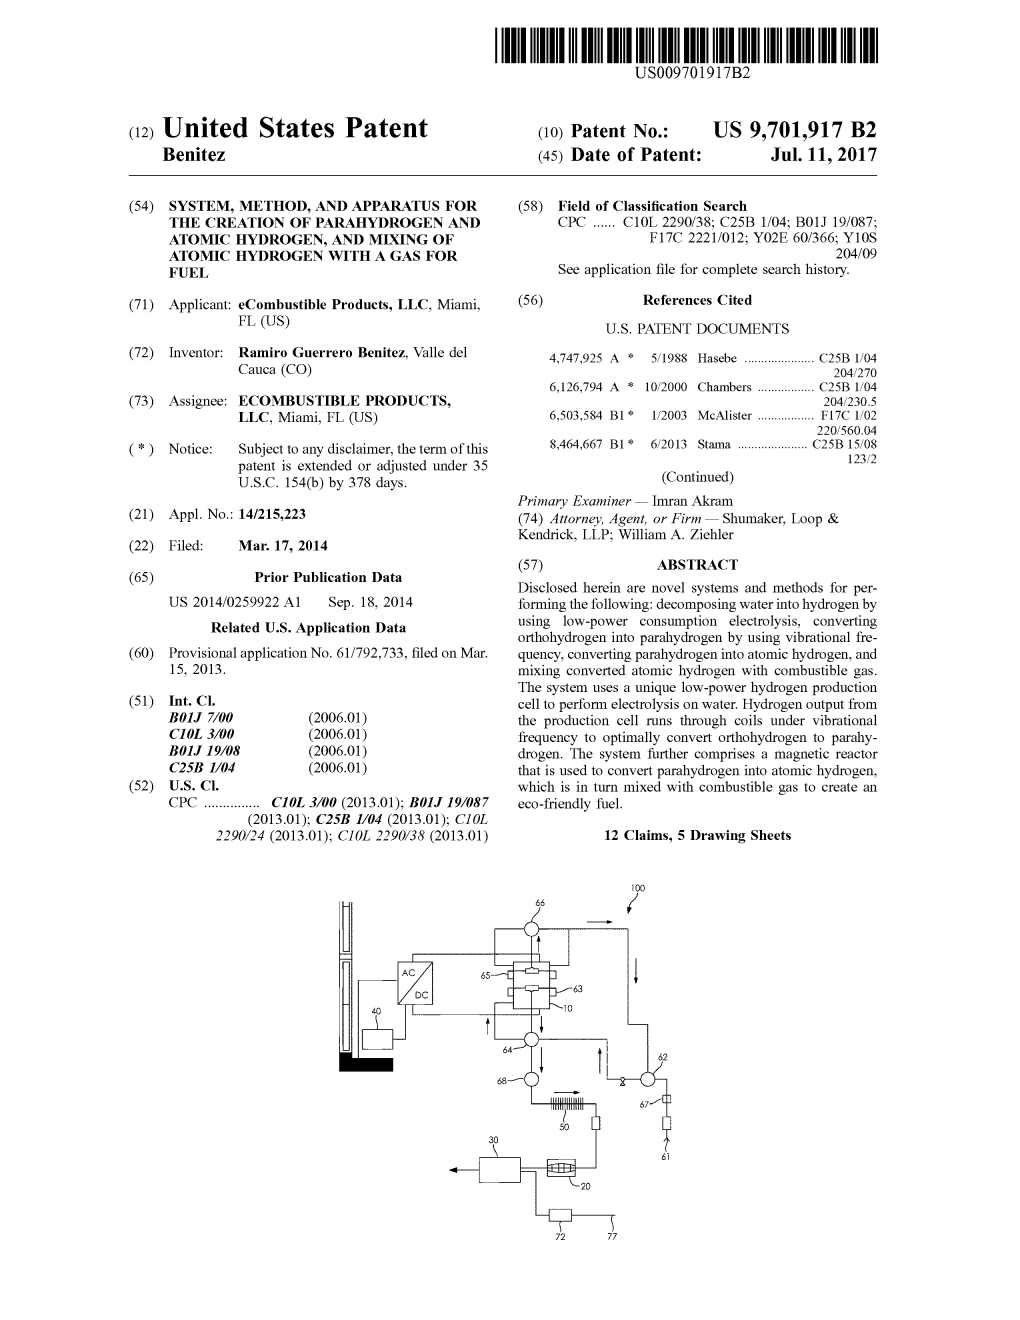 (12) United States Patent (10) Patent No.: US 9,701,917 B2 Benitez (45) Date of Patent: Jul